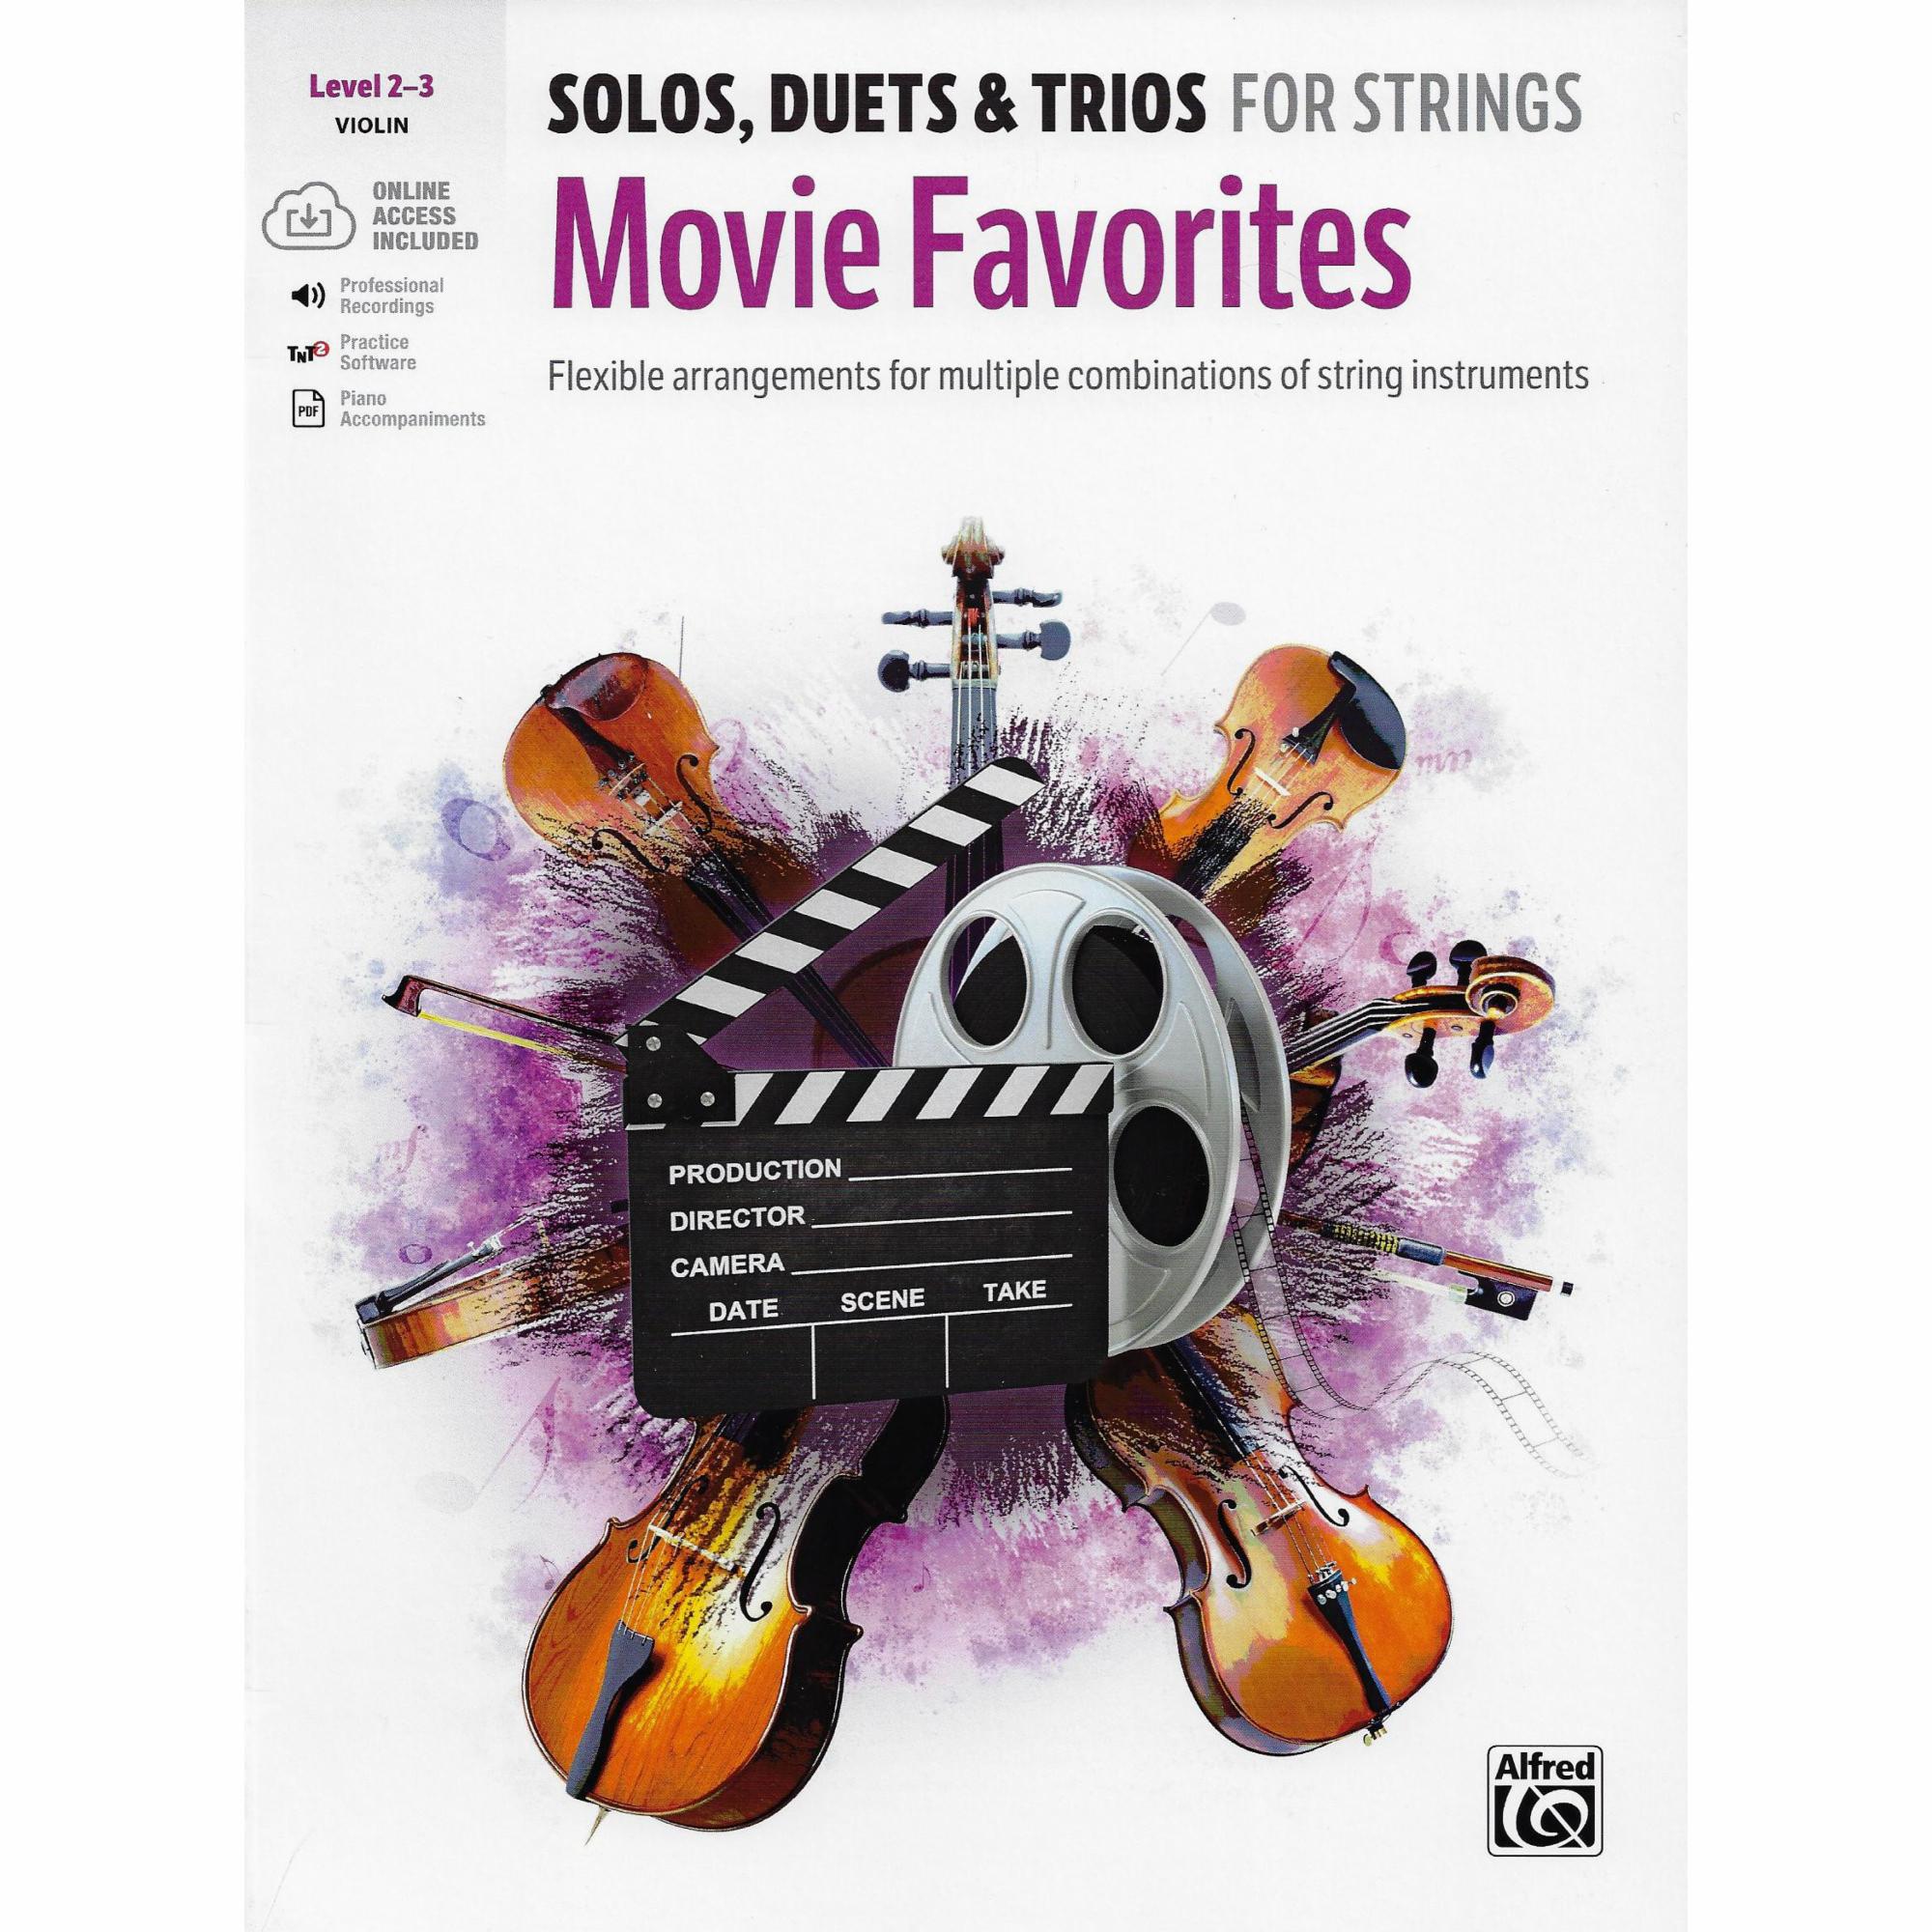 Movie Favorites for Strings